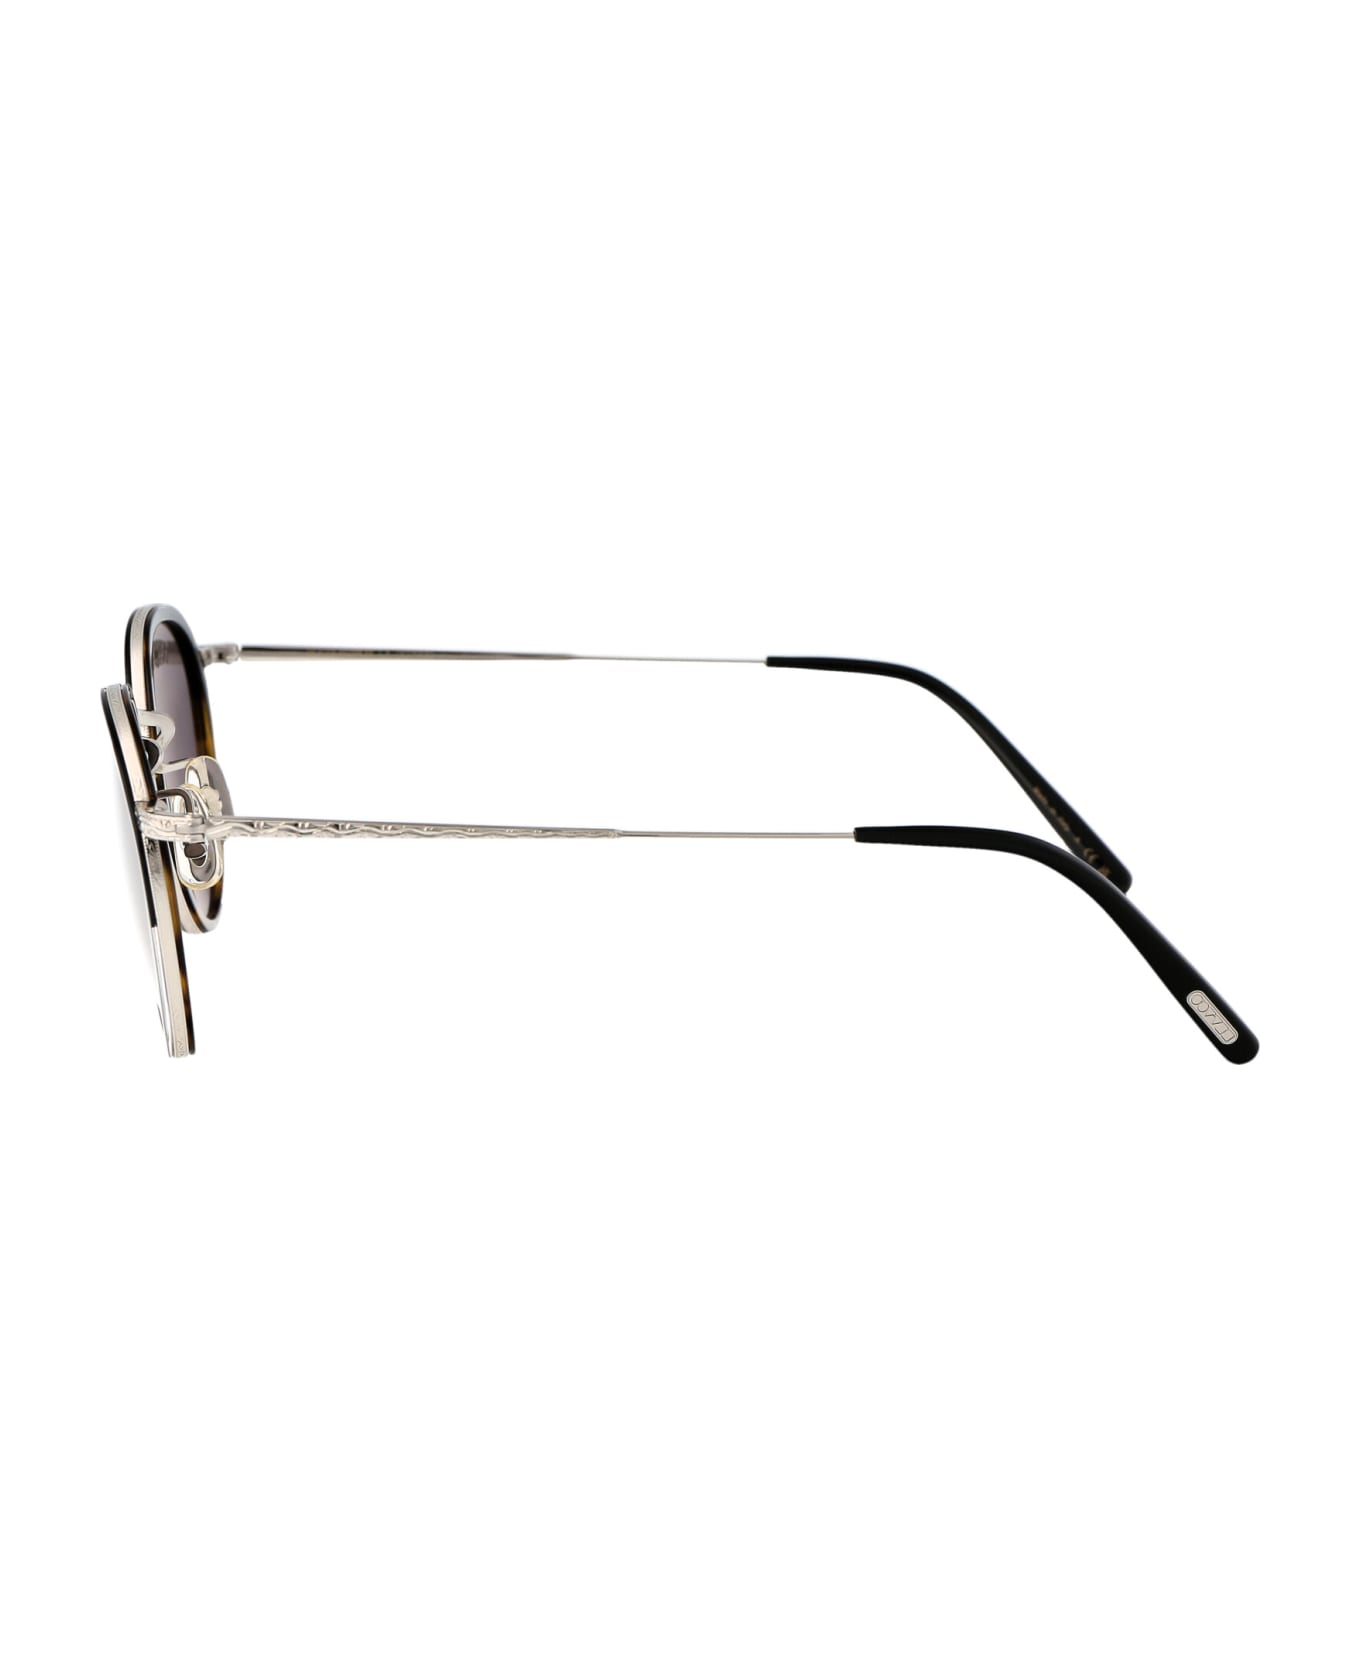 Oliver Peoples Mp-2 Sun Sunglasses - 5036R5 Black/362 Gradient/Silver サングラス